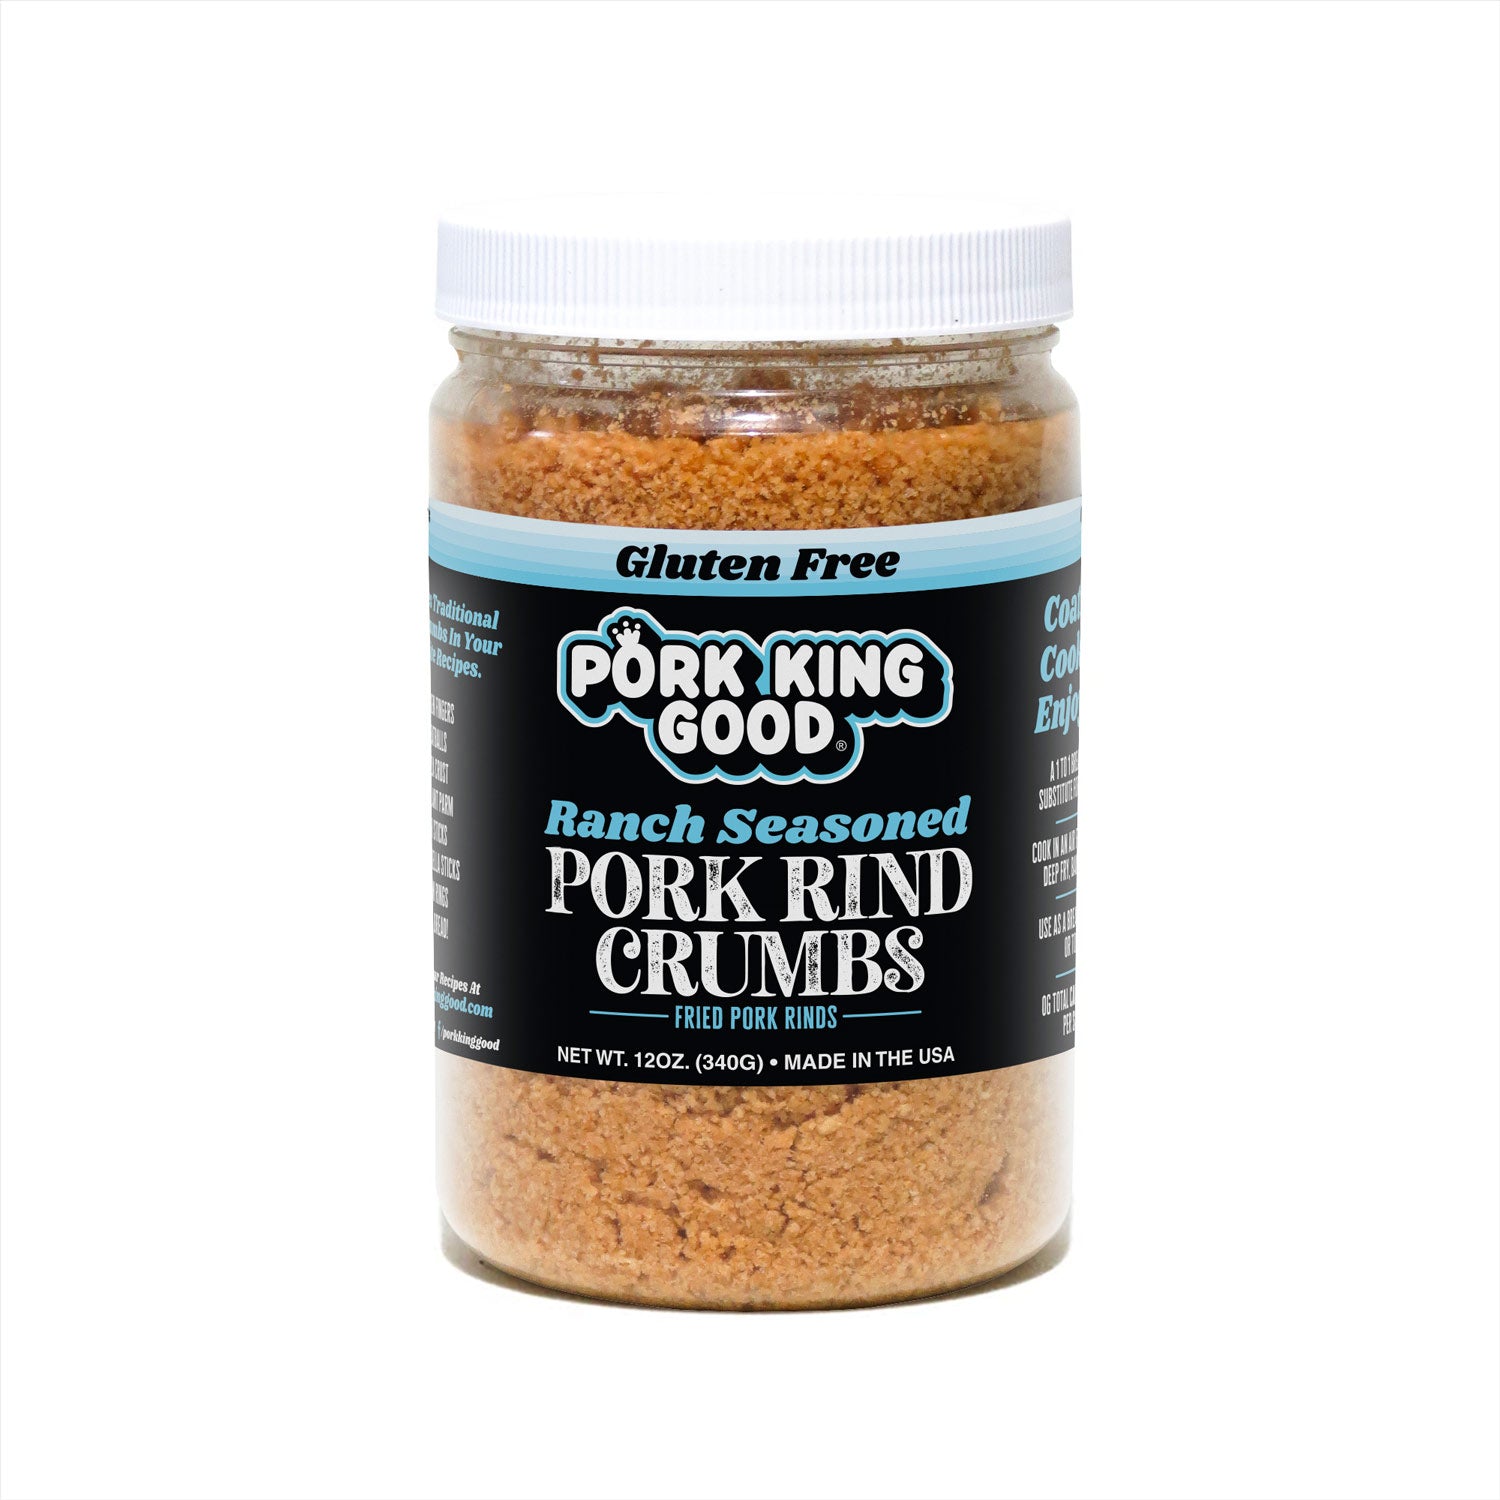 Pork King Good Pork Rind Crumbs Ranch Seasoned - 12 oz (340 g), 12 oz -  Kroger